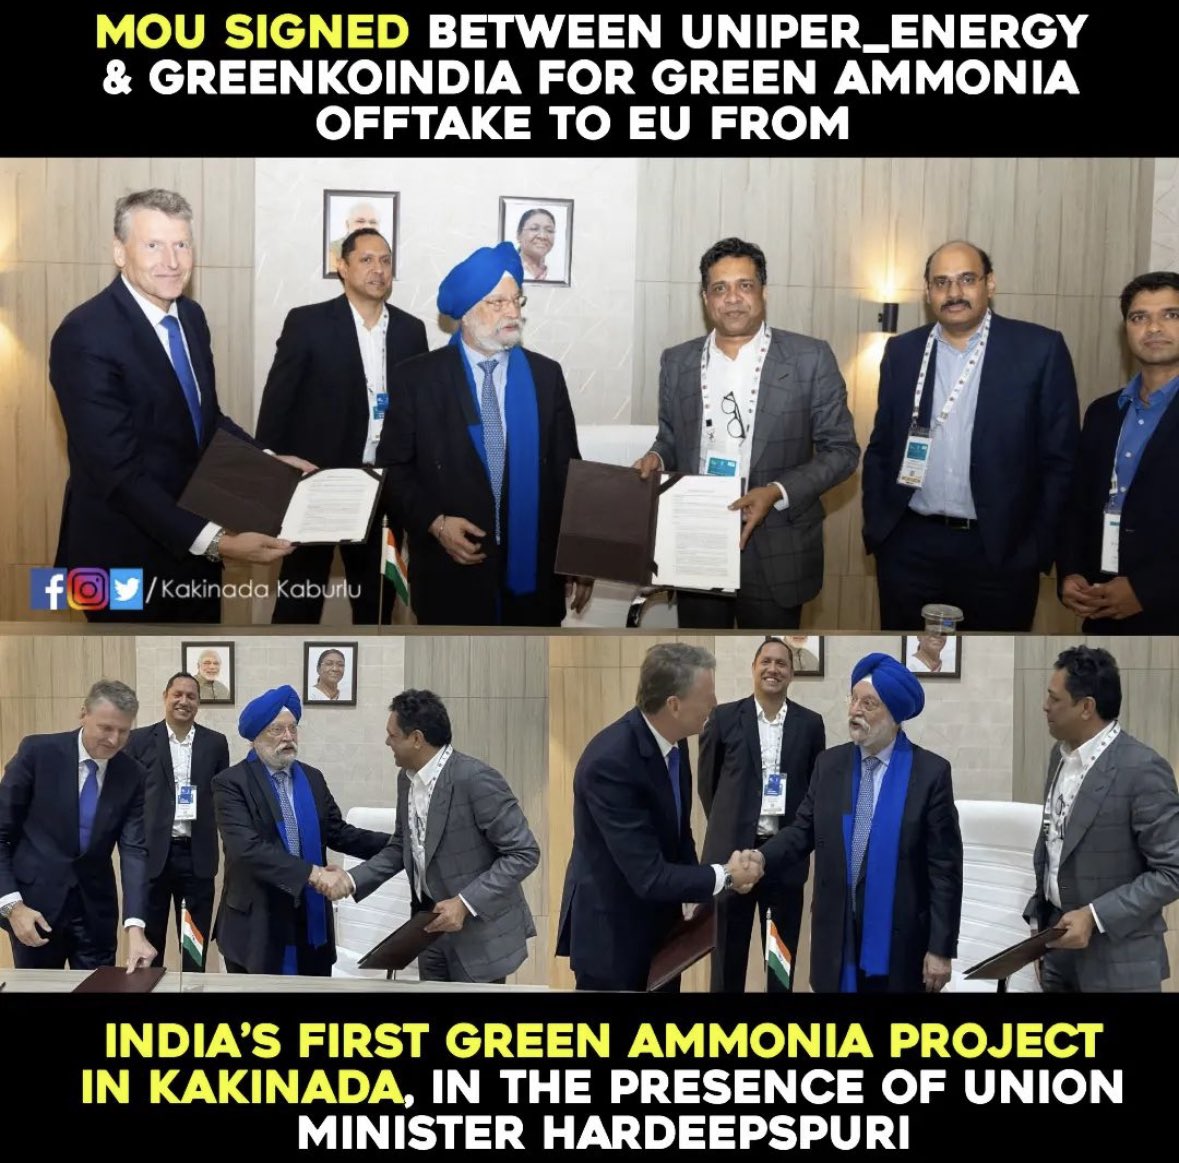 India's first green Ammonia project in Kakinada !! 

#GreenAmmonia #Kakinada